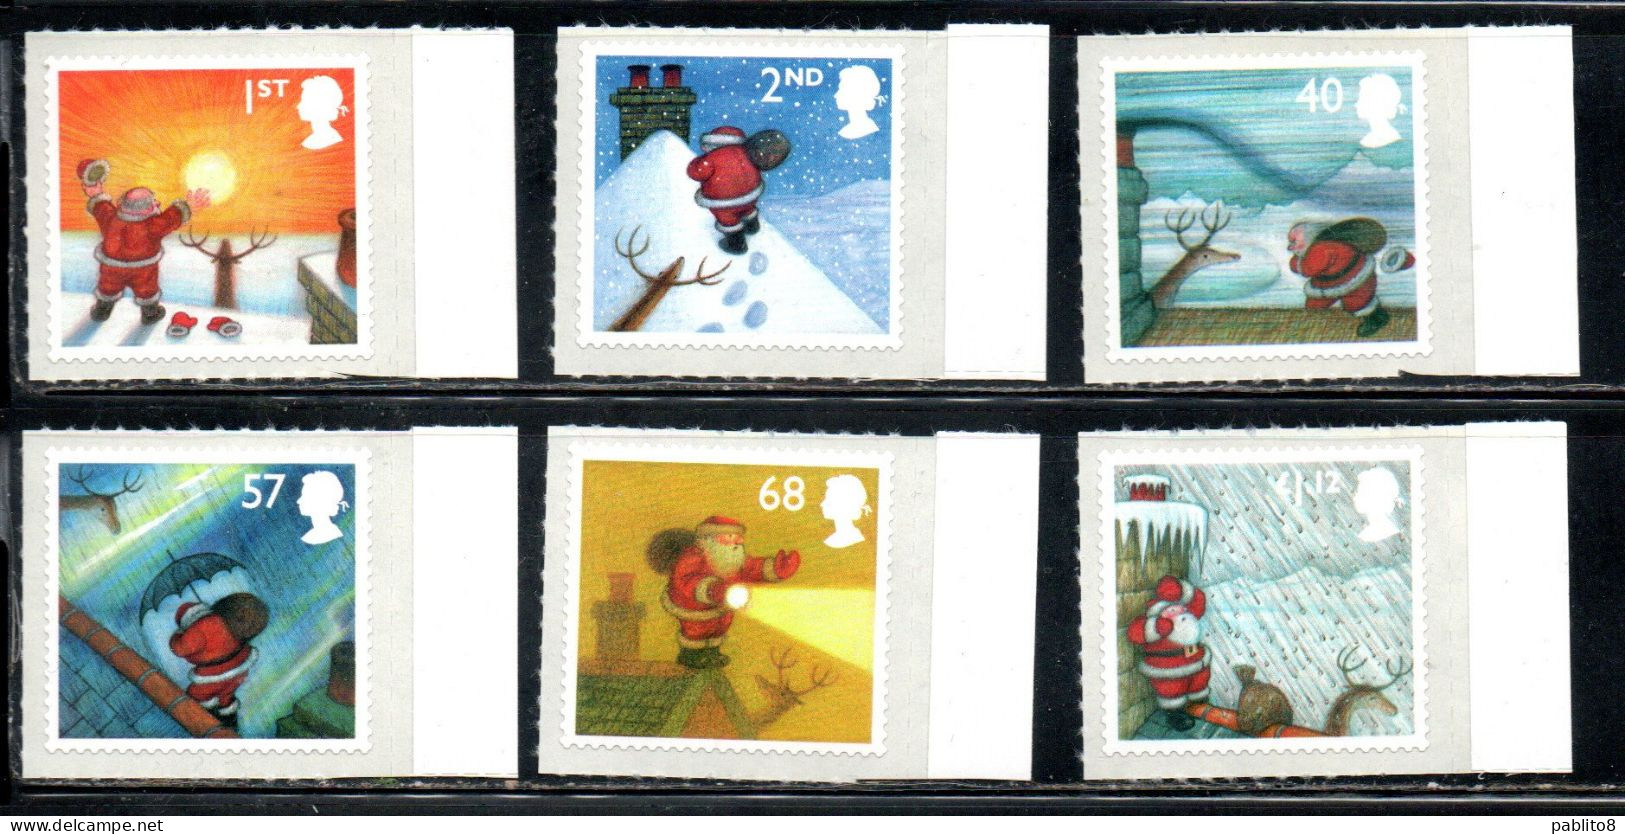 GREAT BRITAIN GRAN BRETAGNA 2004 CHRISTMAS NATALE NOEL WEIHNCHTEN NAVIDAD COMPLETE SET SERIE COMPLETA MNH - Unused Stamps